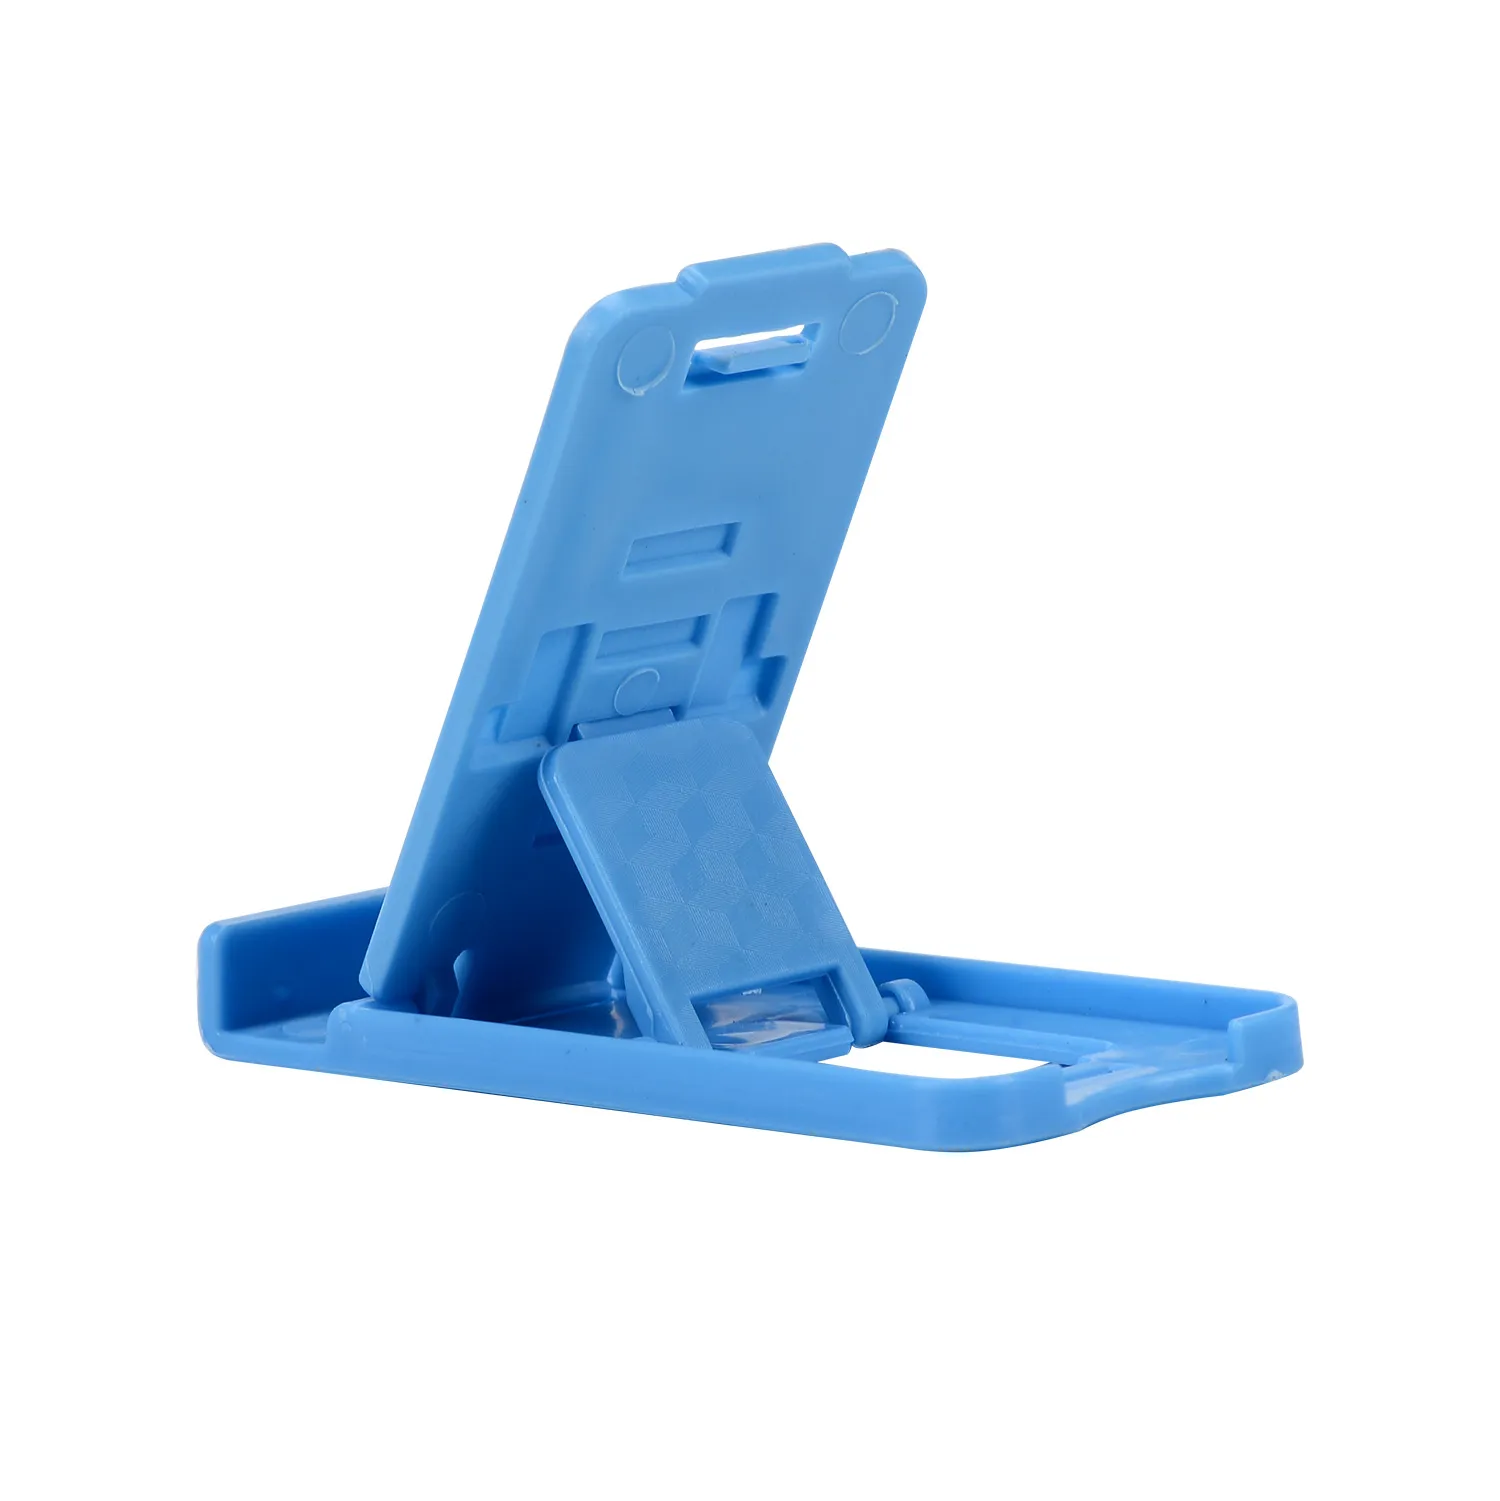 Universal Foldable Phone Stand Plastic Desktop Mount Holder for Xiaomi Huawei Samsung Smart Phones